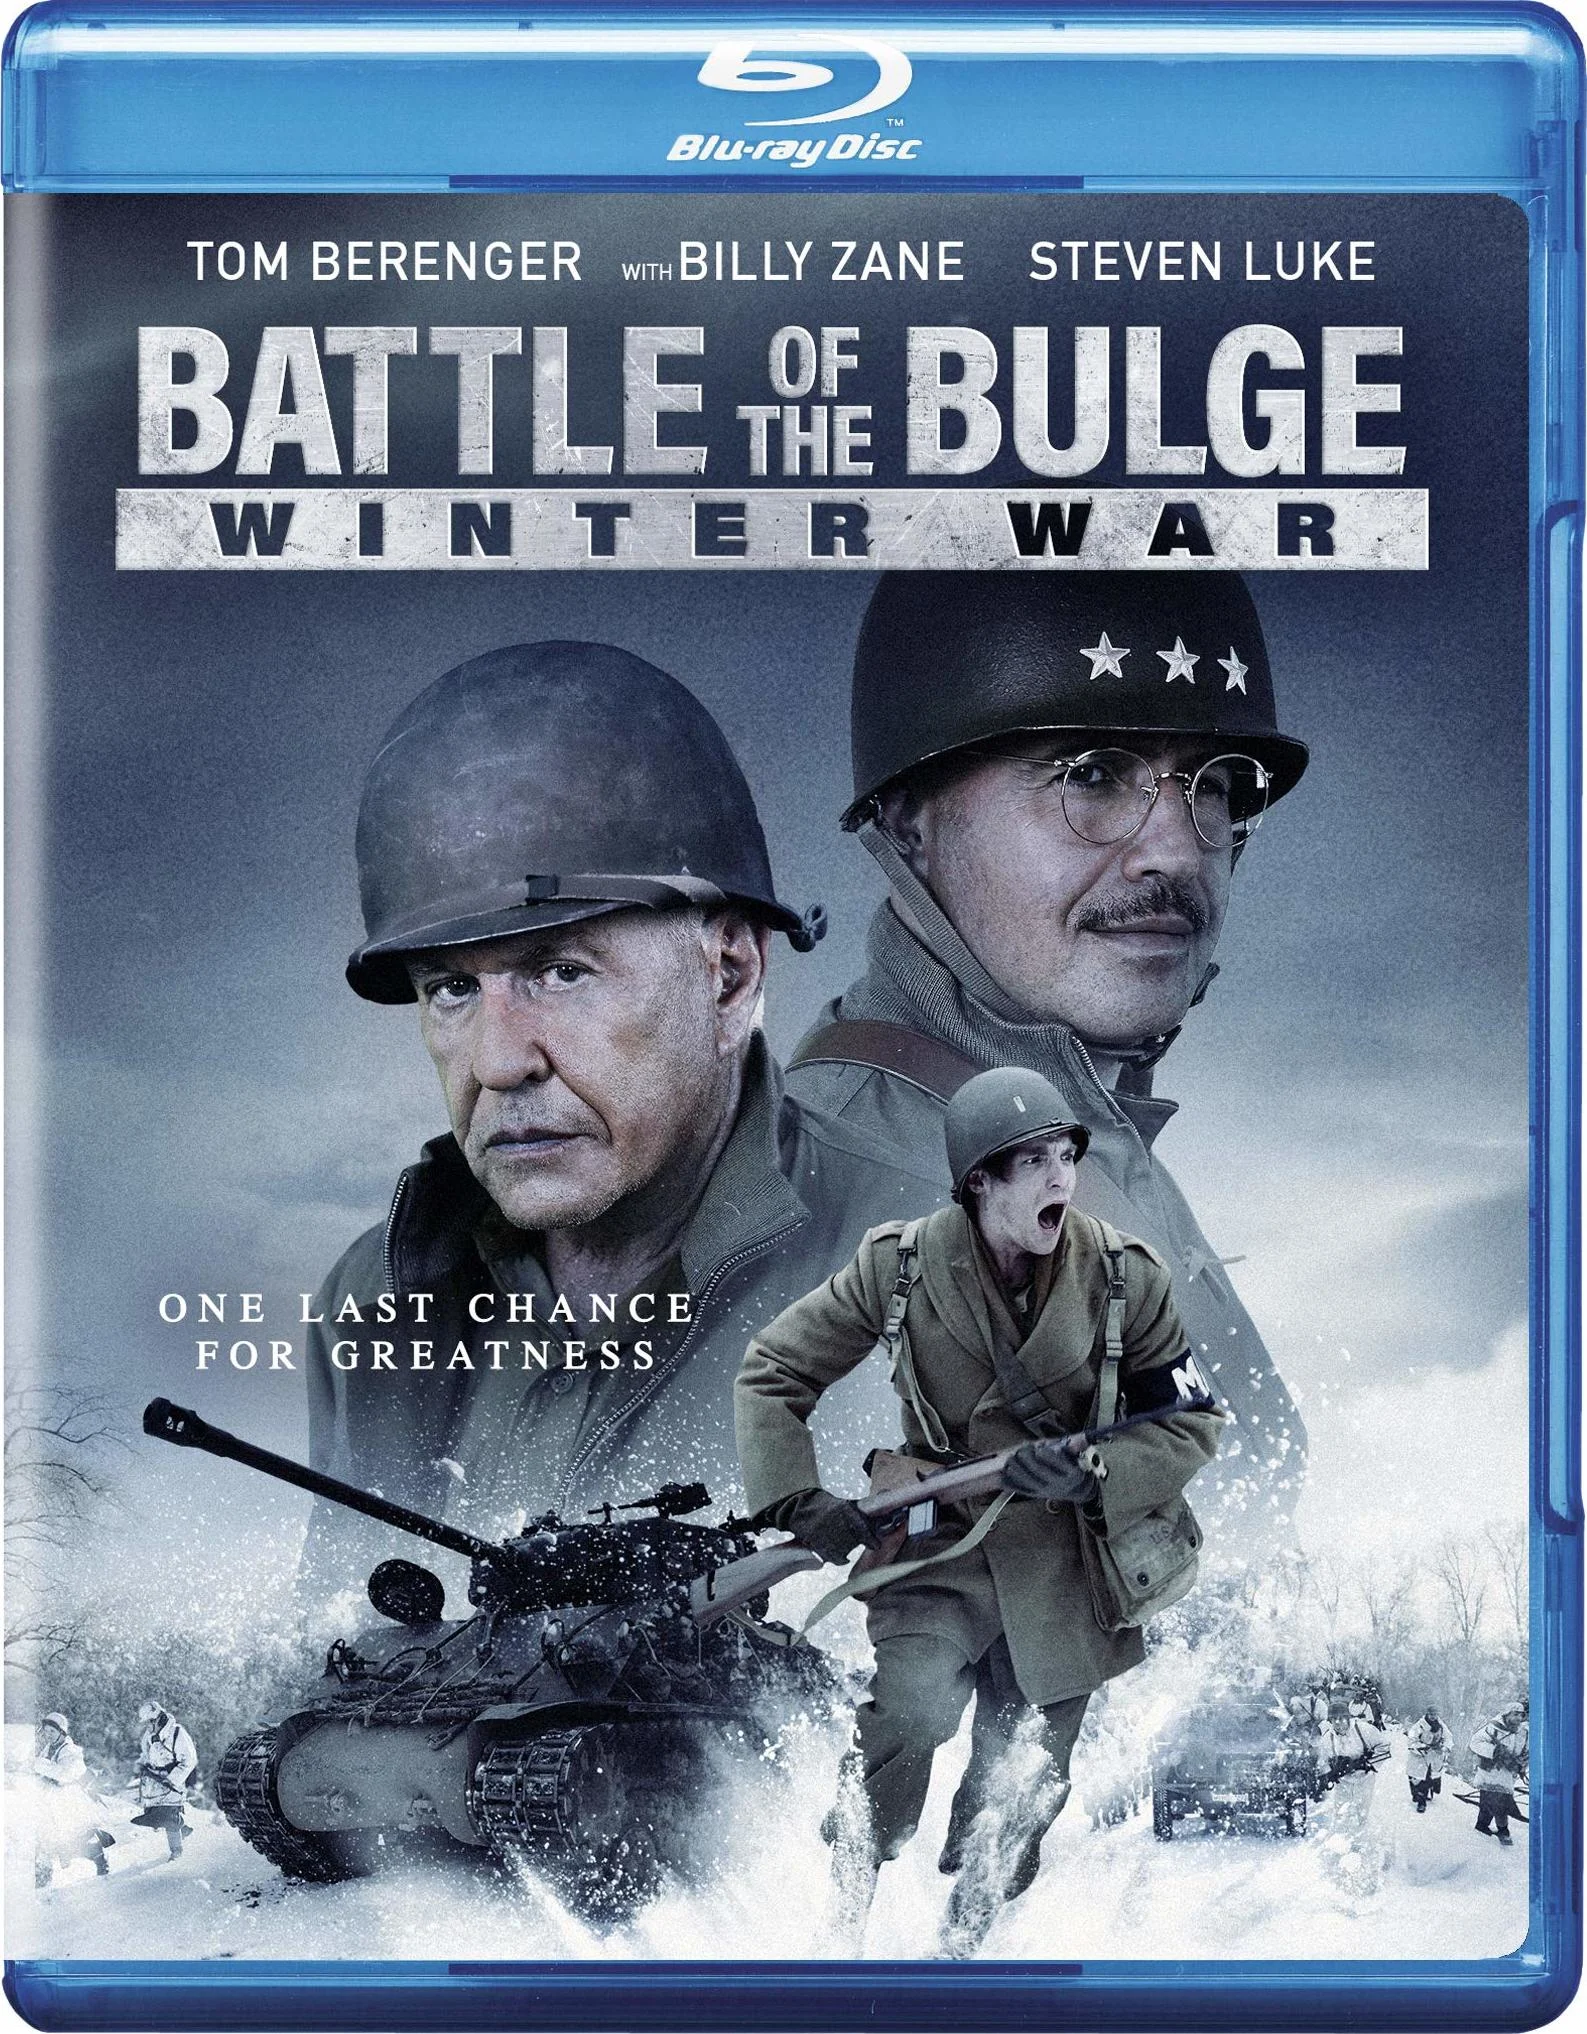 Battle of the Bulge: Winter War (Blu-ray) on MovieShack